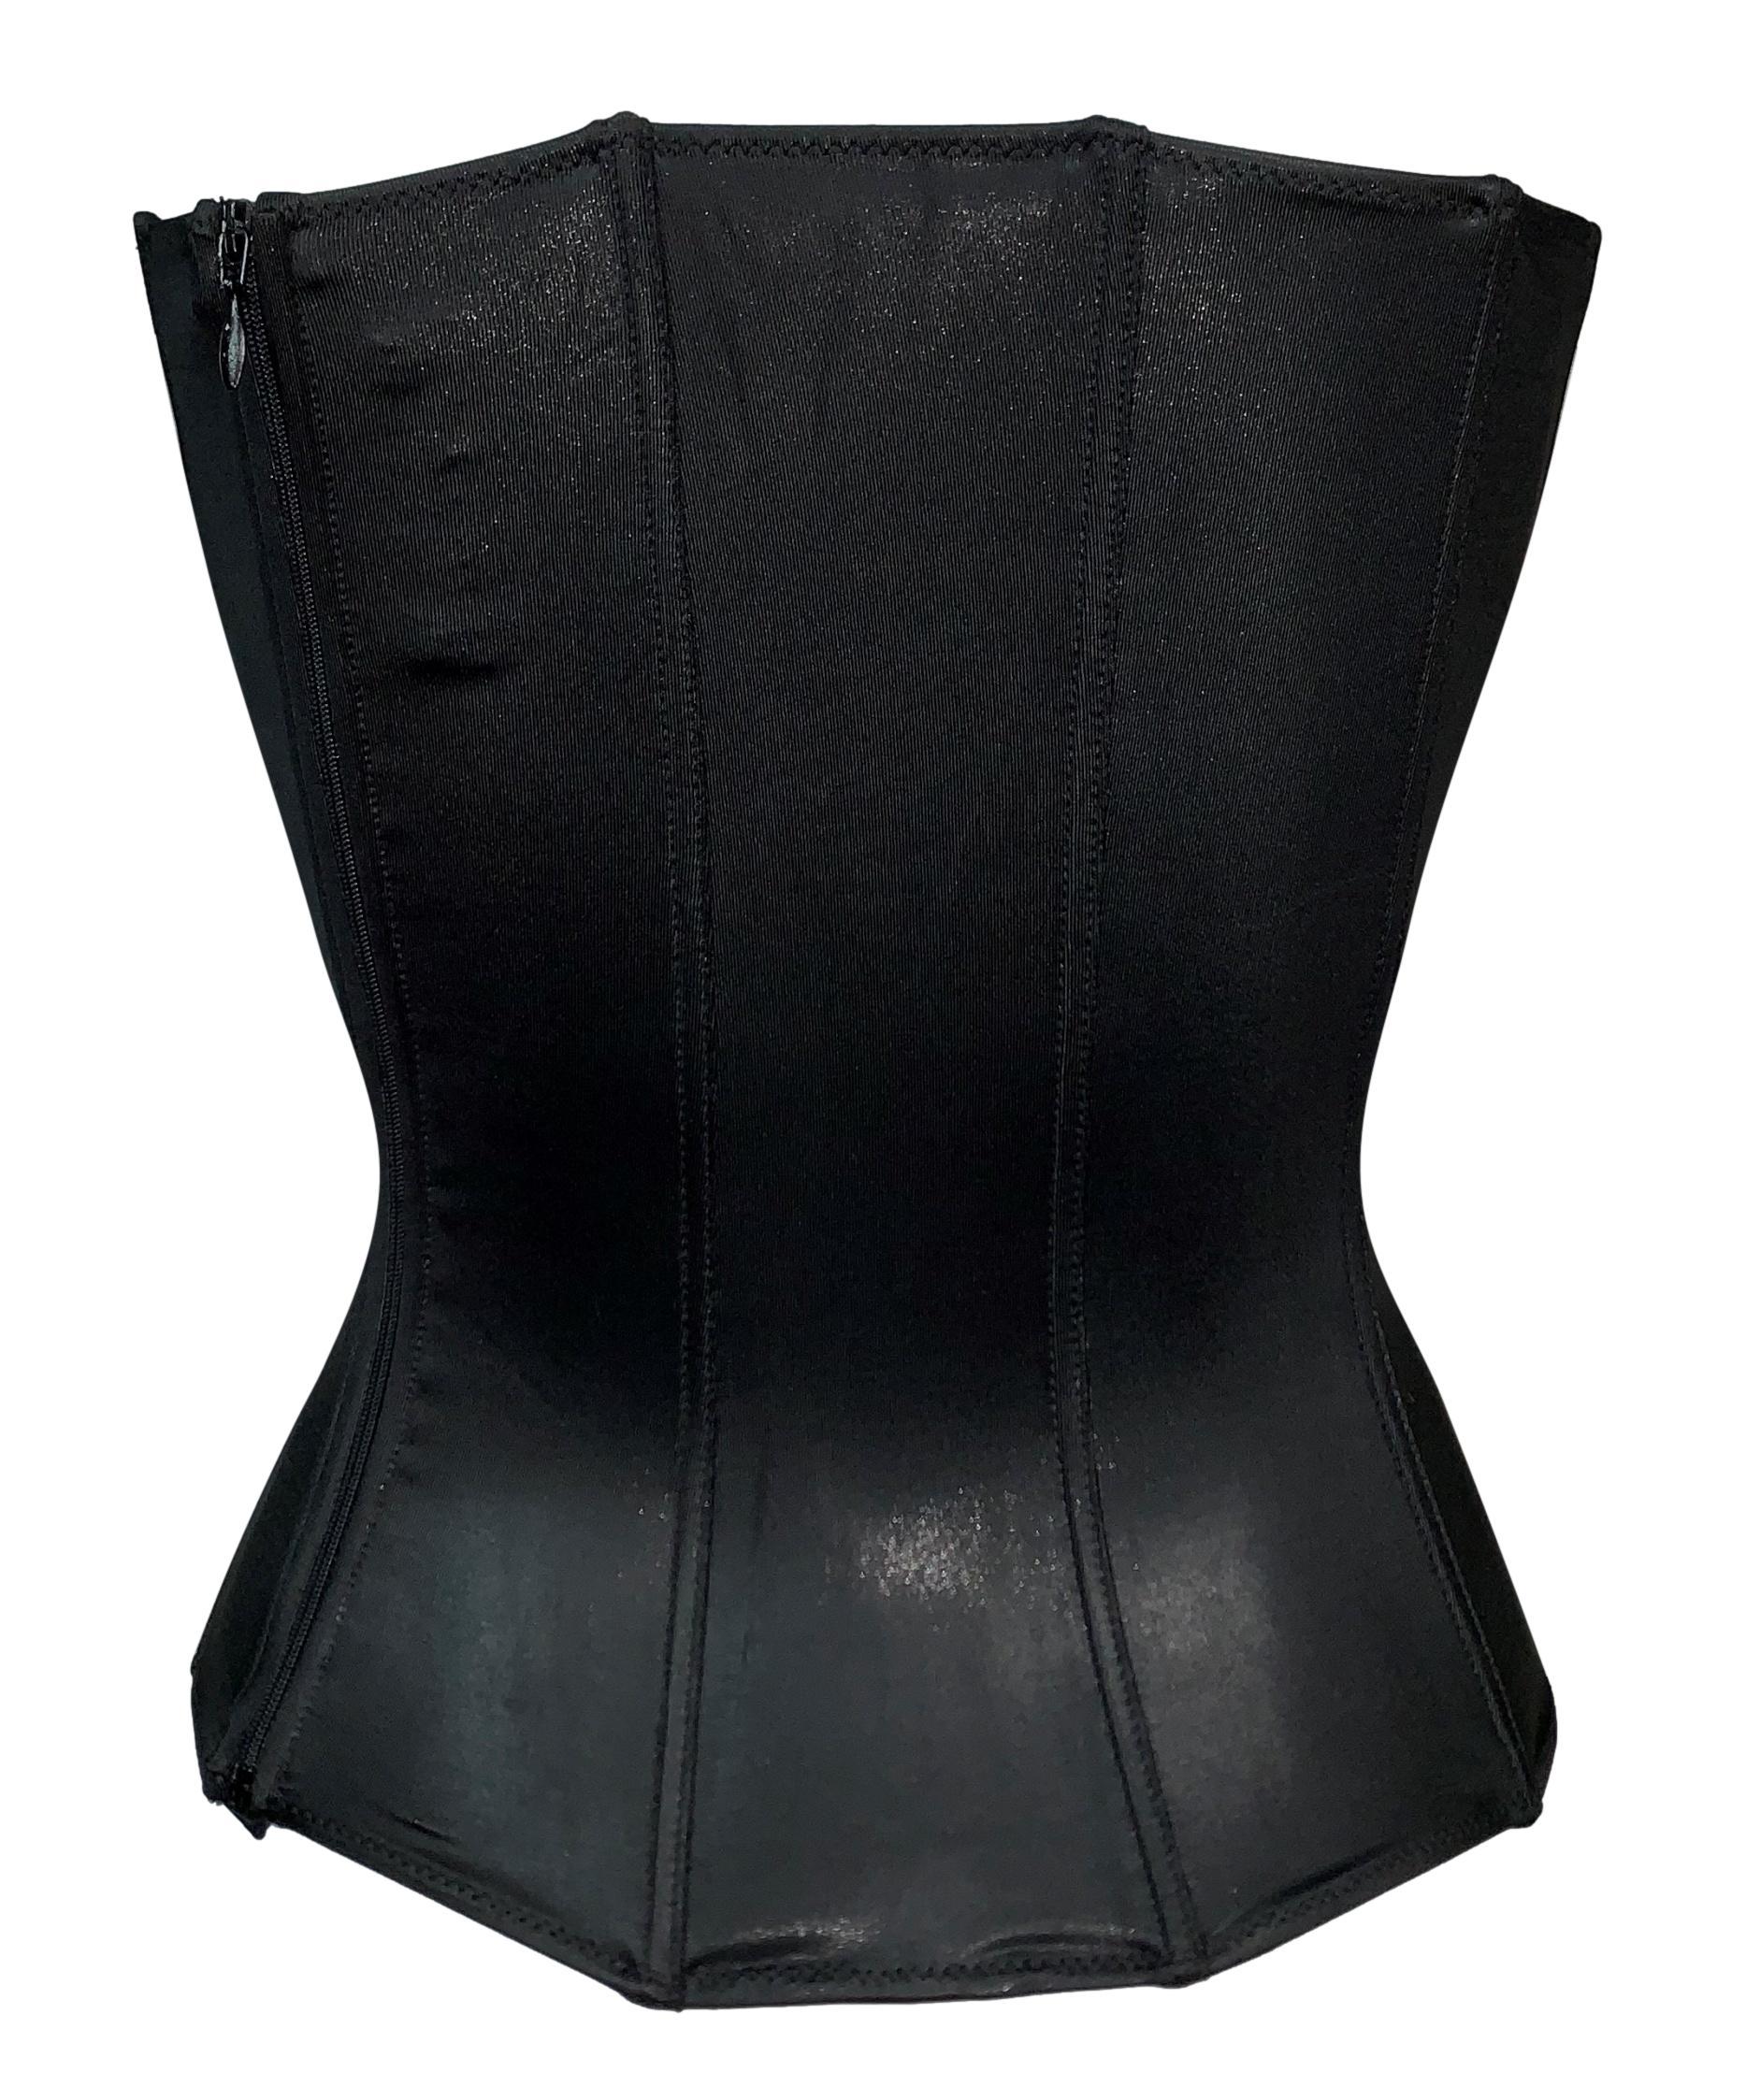 black shiny corset top